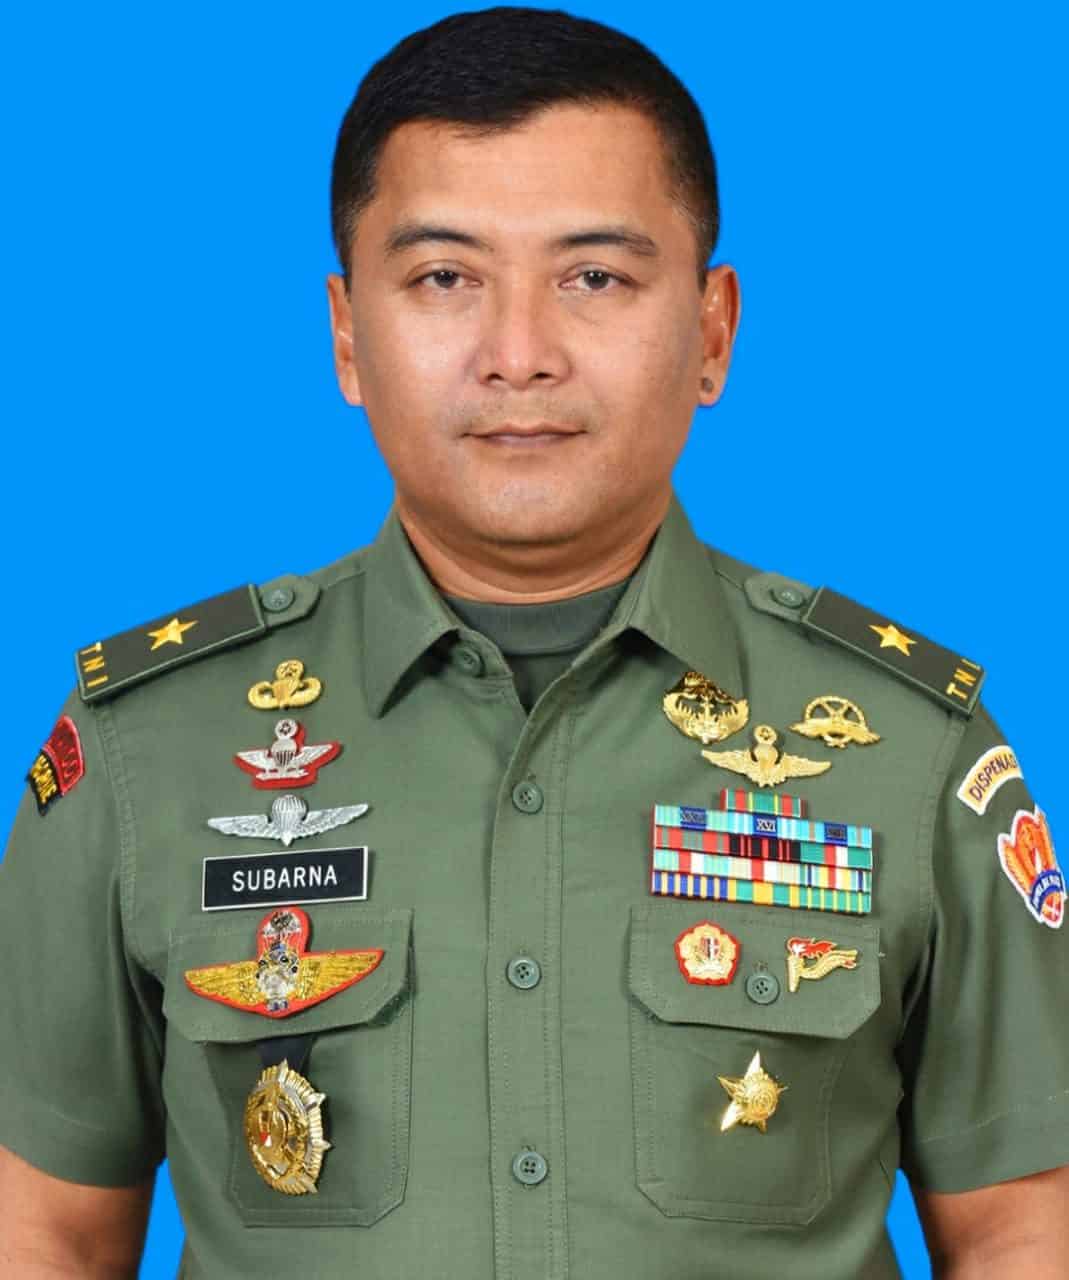 TNI Wajib Taat Aturan Dalam Berlalulintas